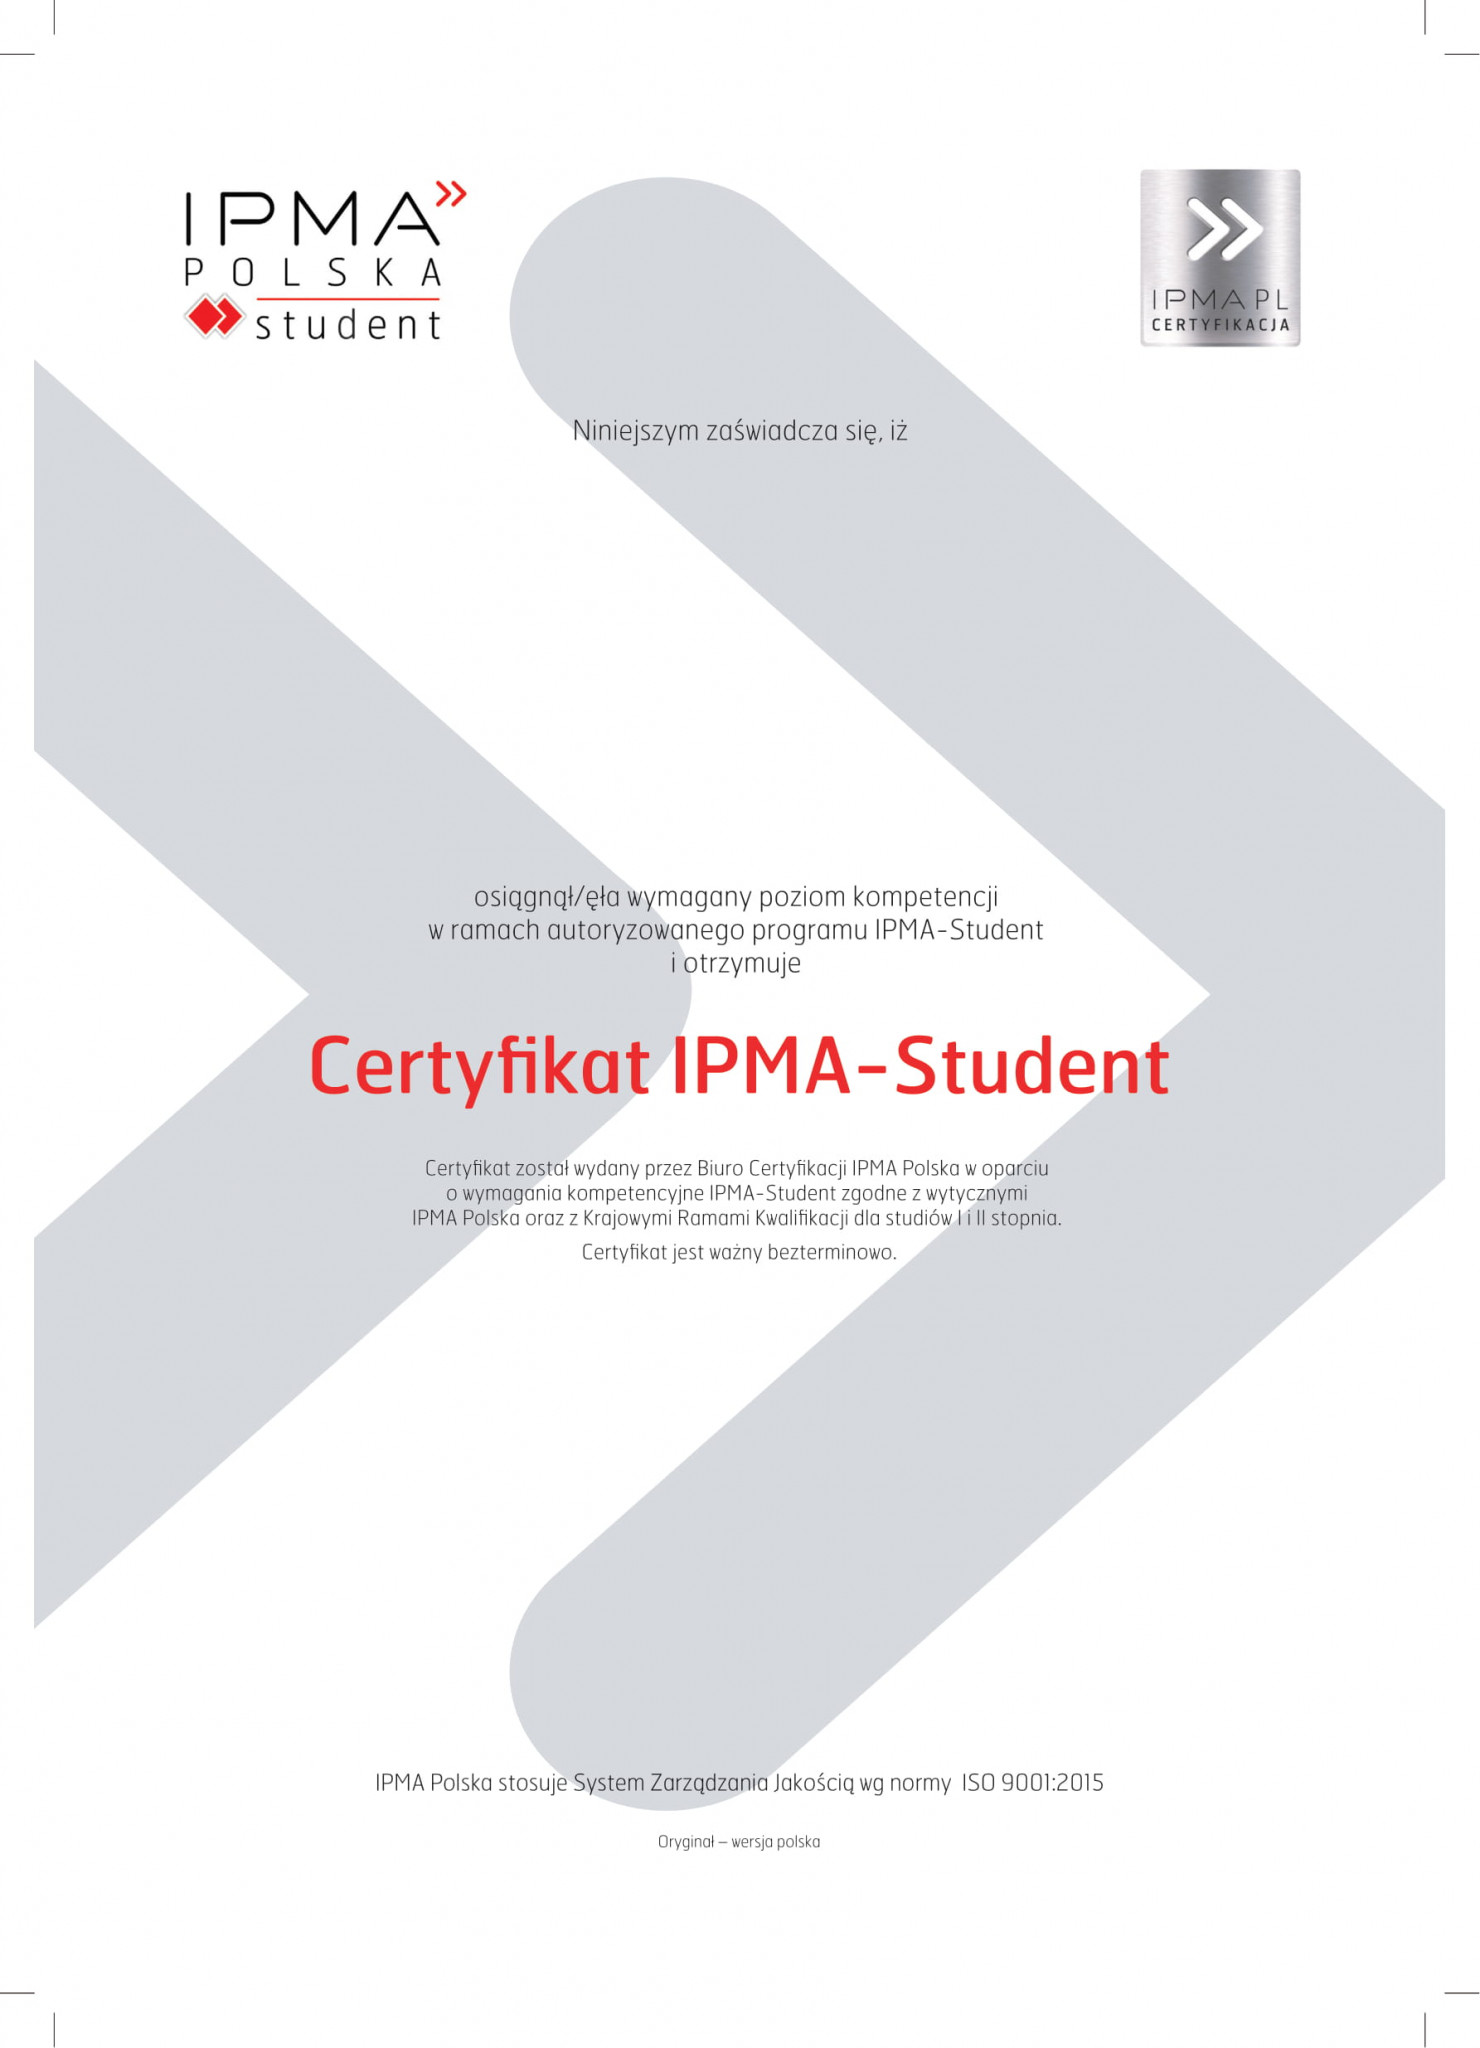 Drukowany certyfikat IPMA-Student